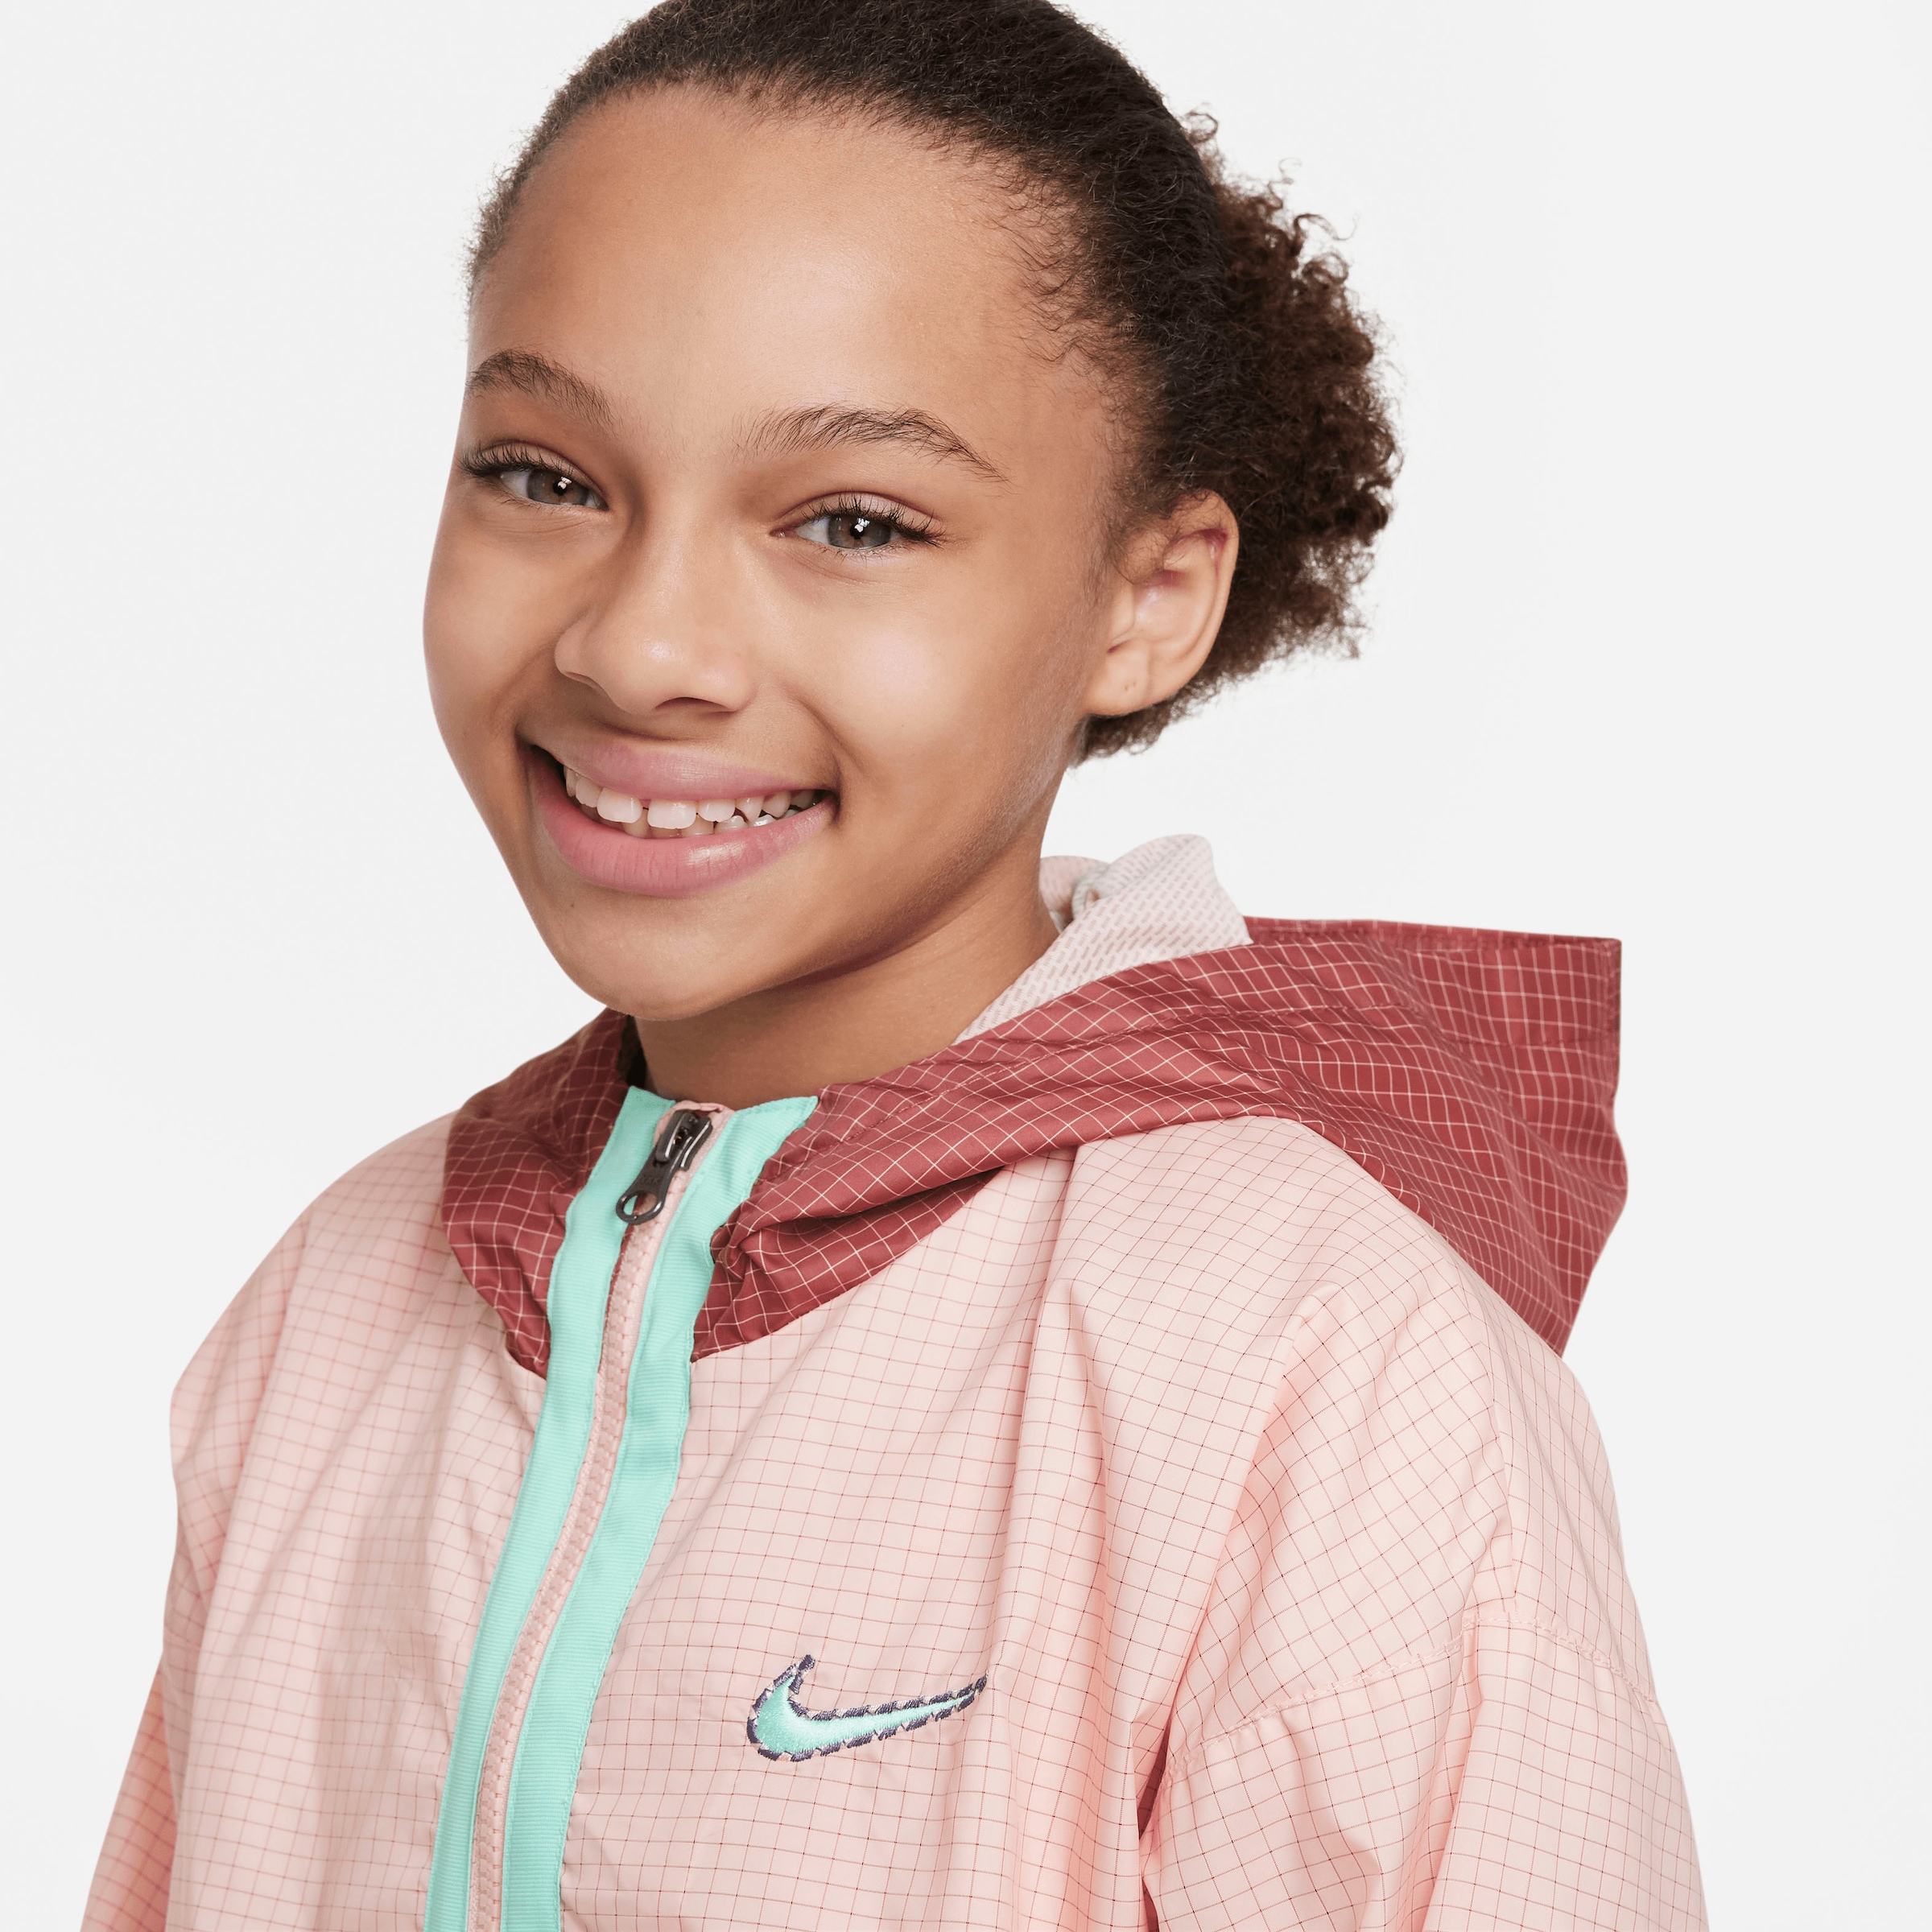 Nike Sportswear Outdoorjacke »ODP Big Kids' Woven Jacket«, mit Kapuze